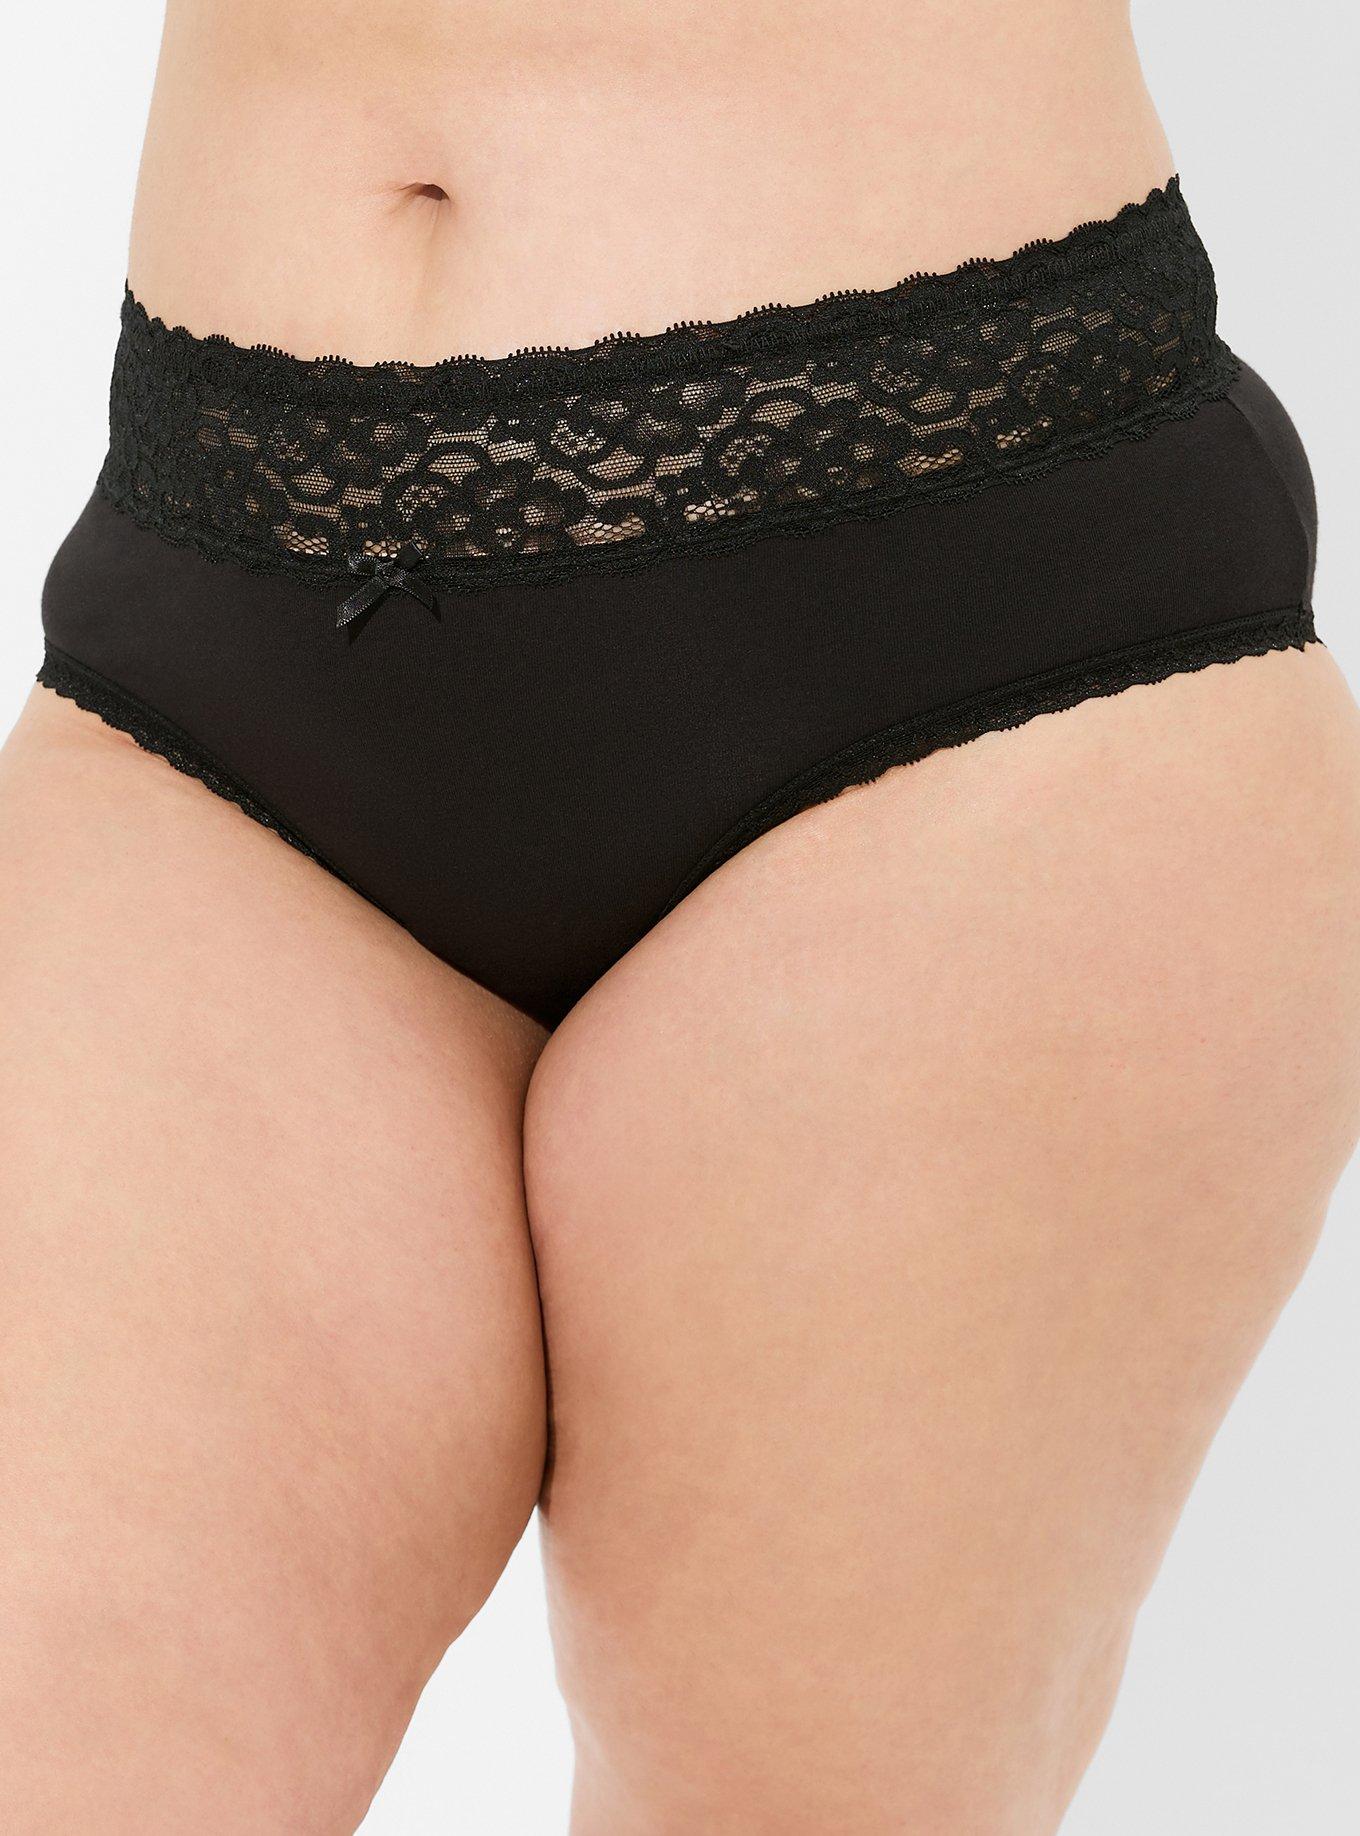 Torrid Cheeky Panties Underwear 2 pair Cotton Wide Lace waistband